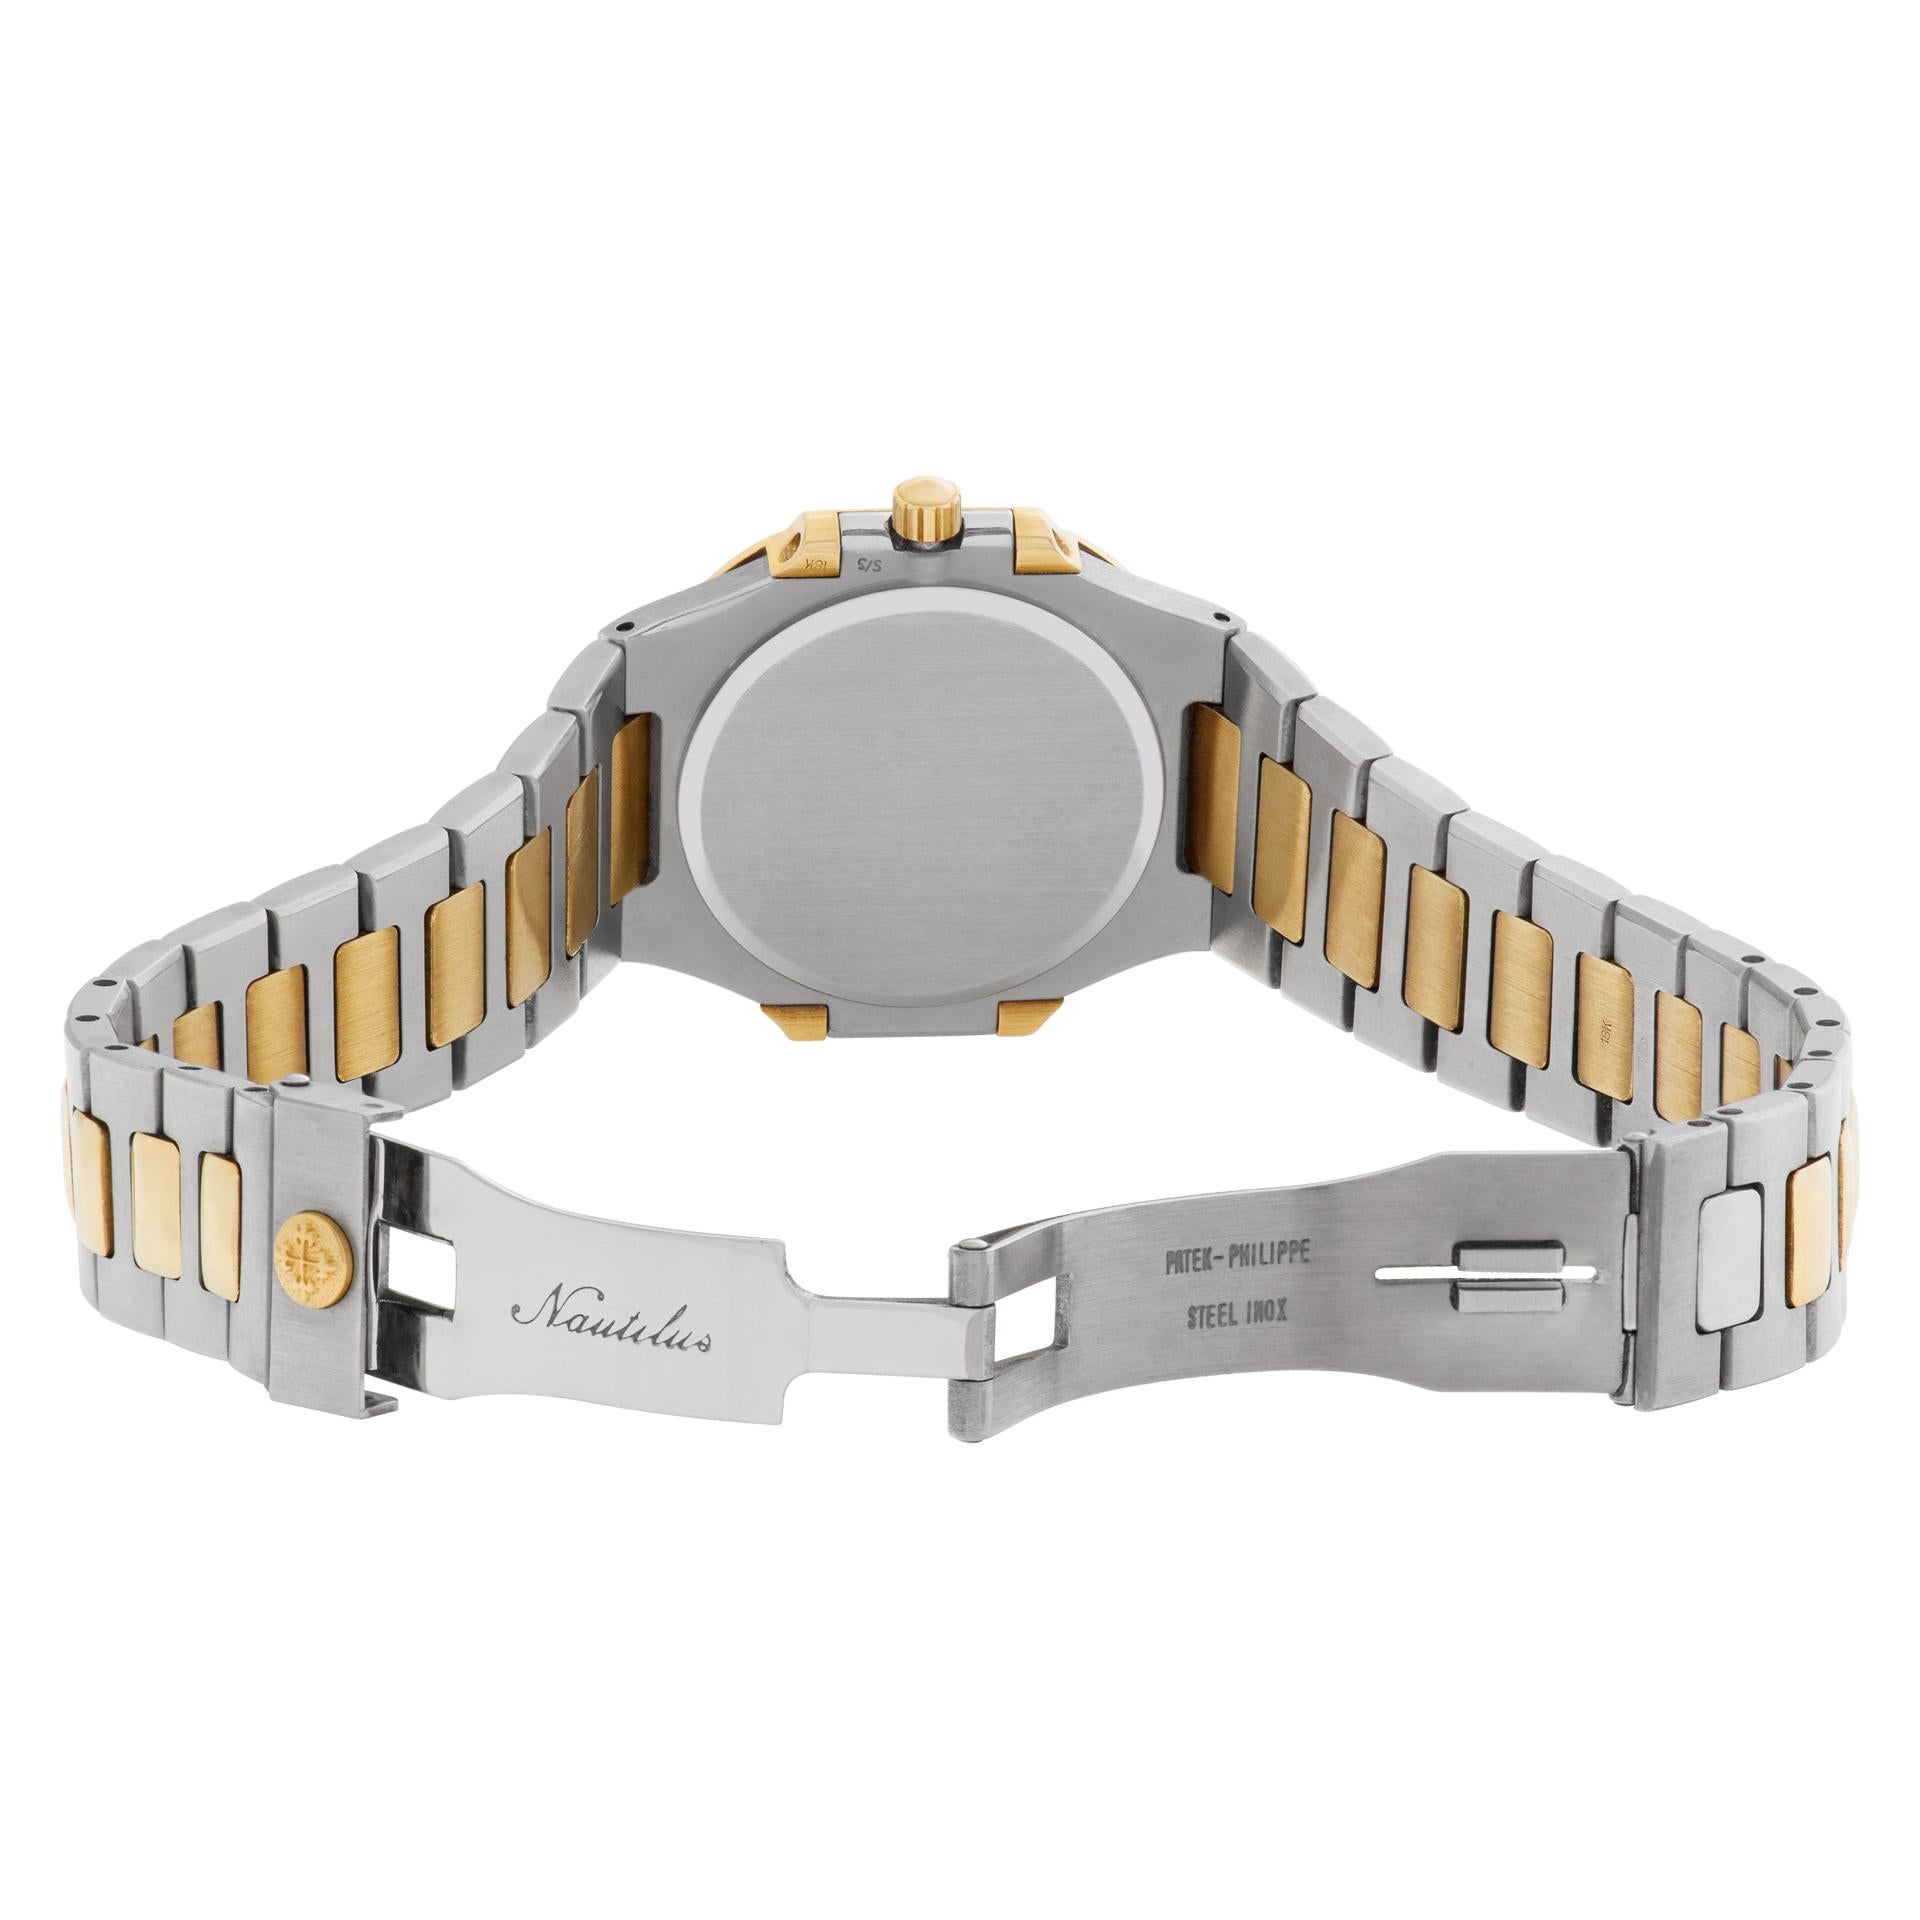 Patek Philippe Nautilus Stainless Steel Wristwatch Ref 3900 1